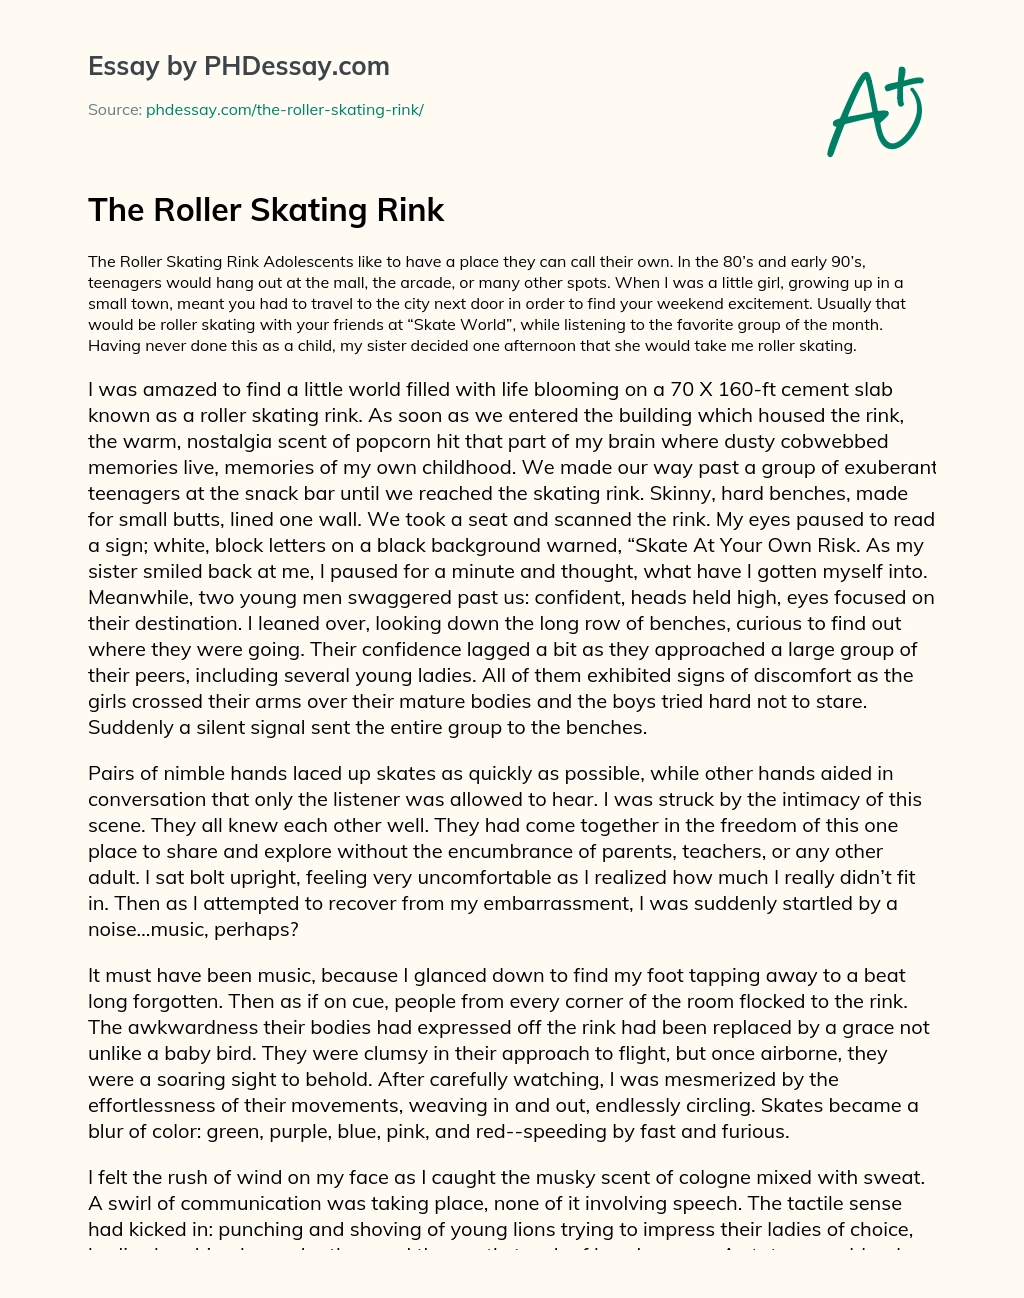 The Roller Skating Rink essay